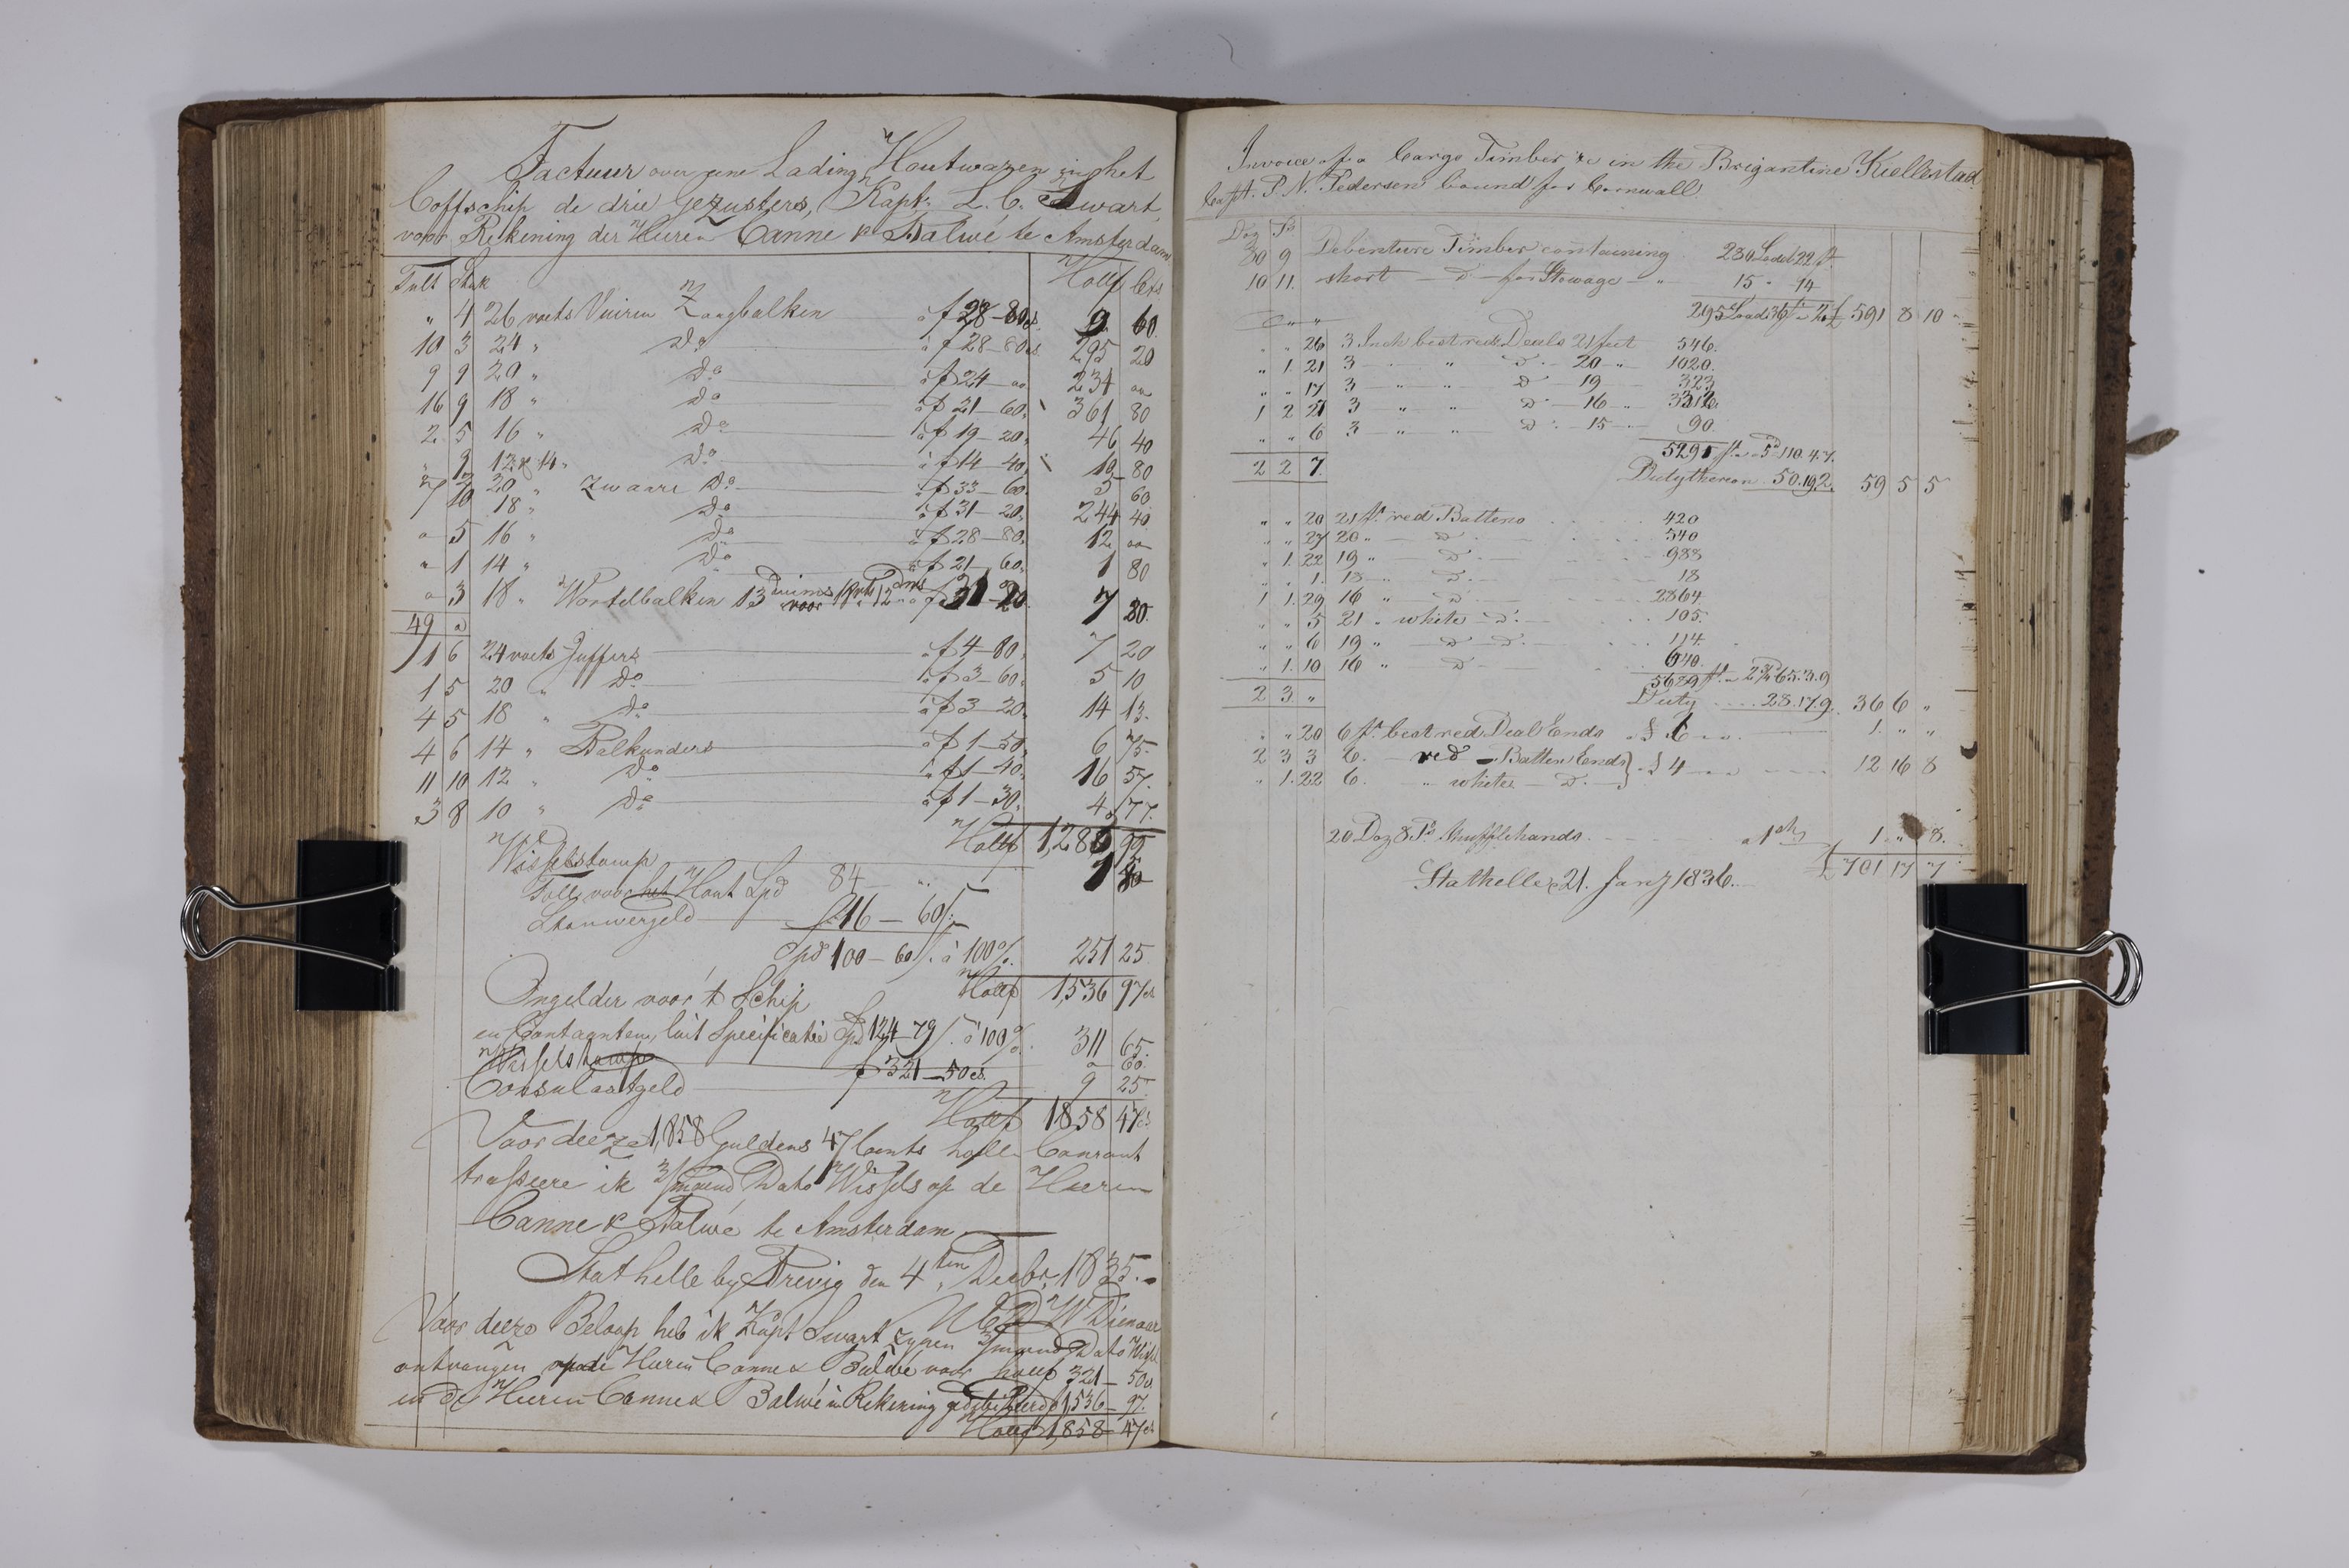 , Priscourant-tømmerpriser, 1834-38, 1834-1838, p. 218